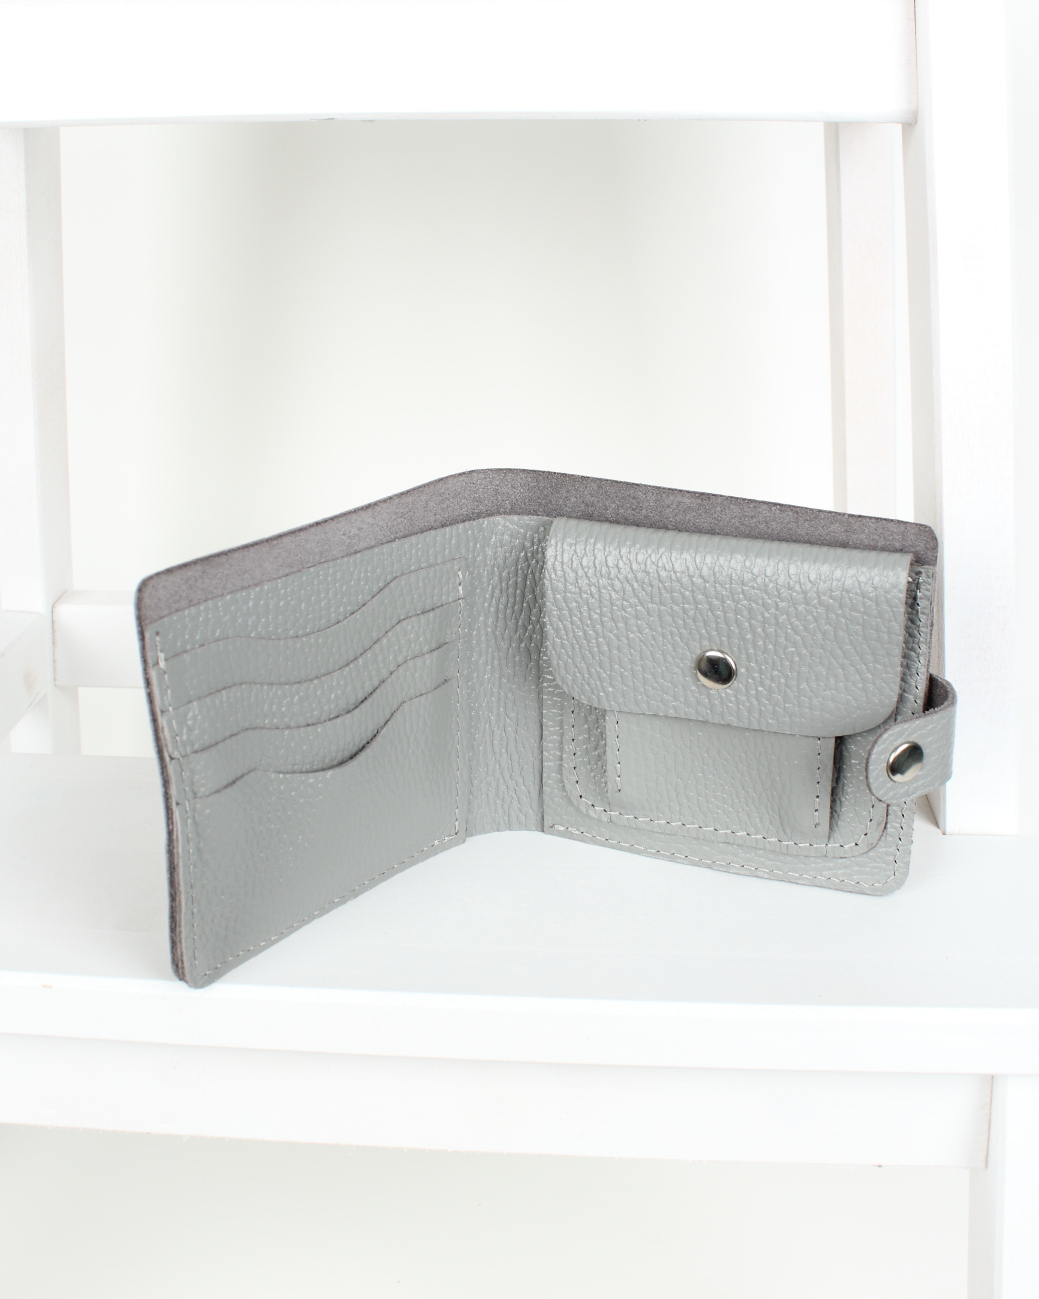 Кожаный кошелек серый W005 grey grain